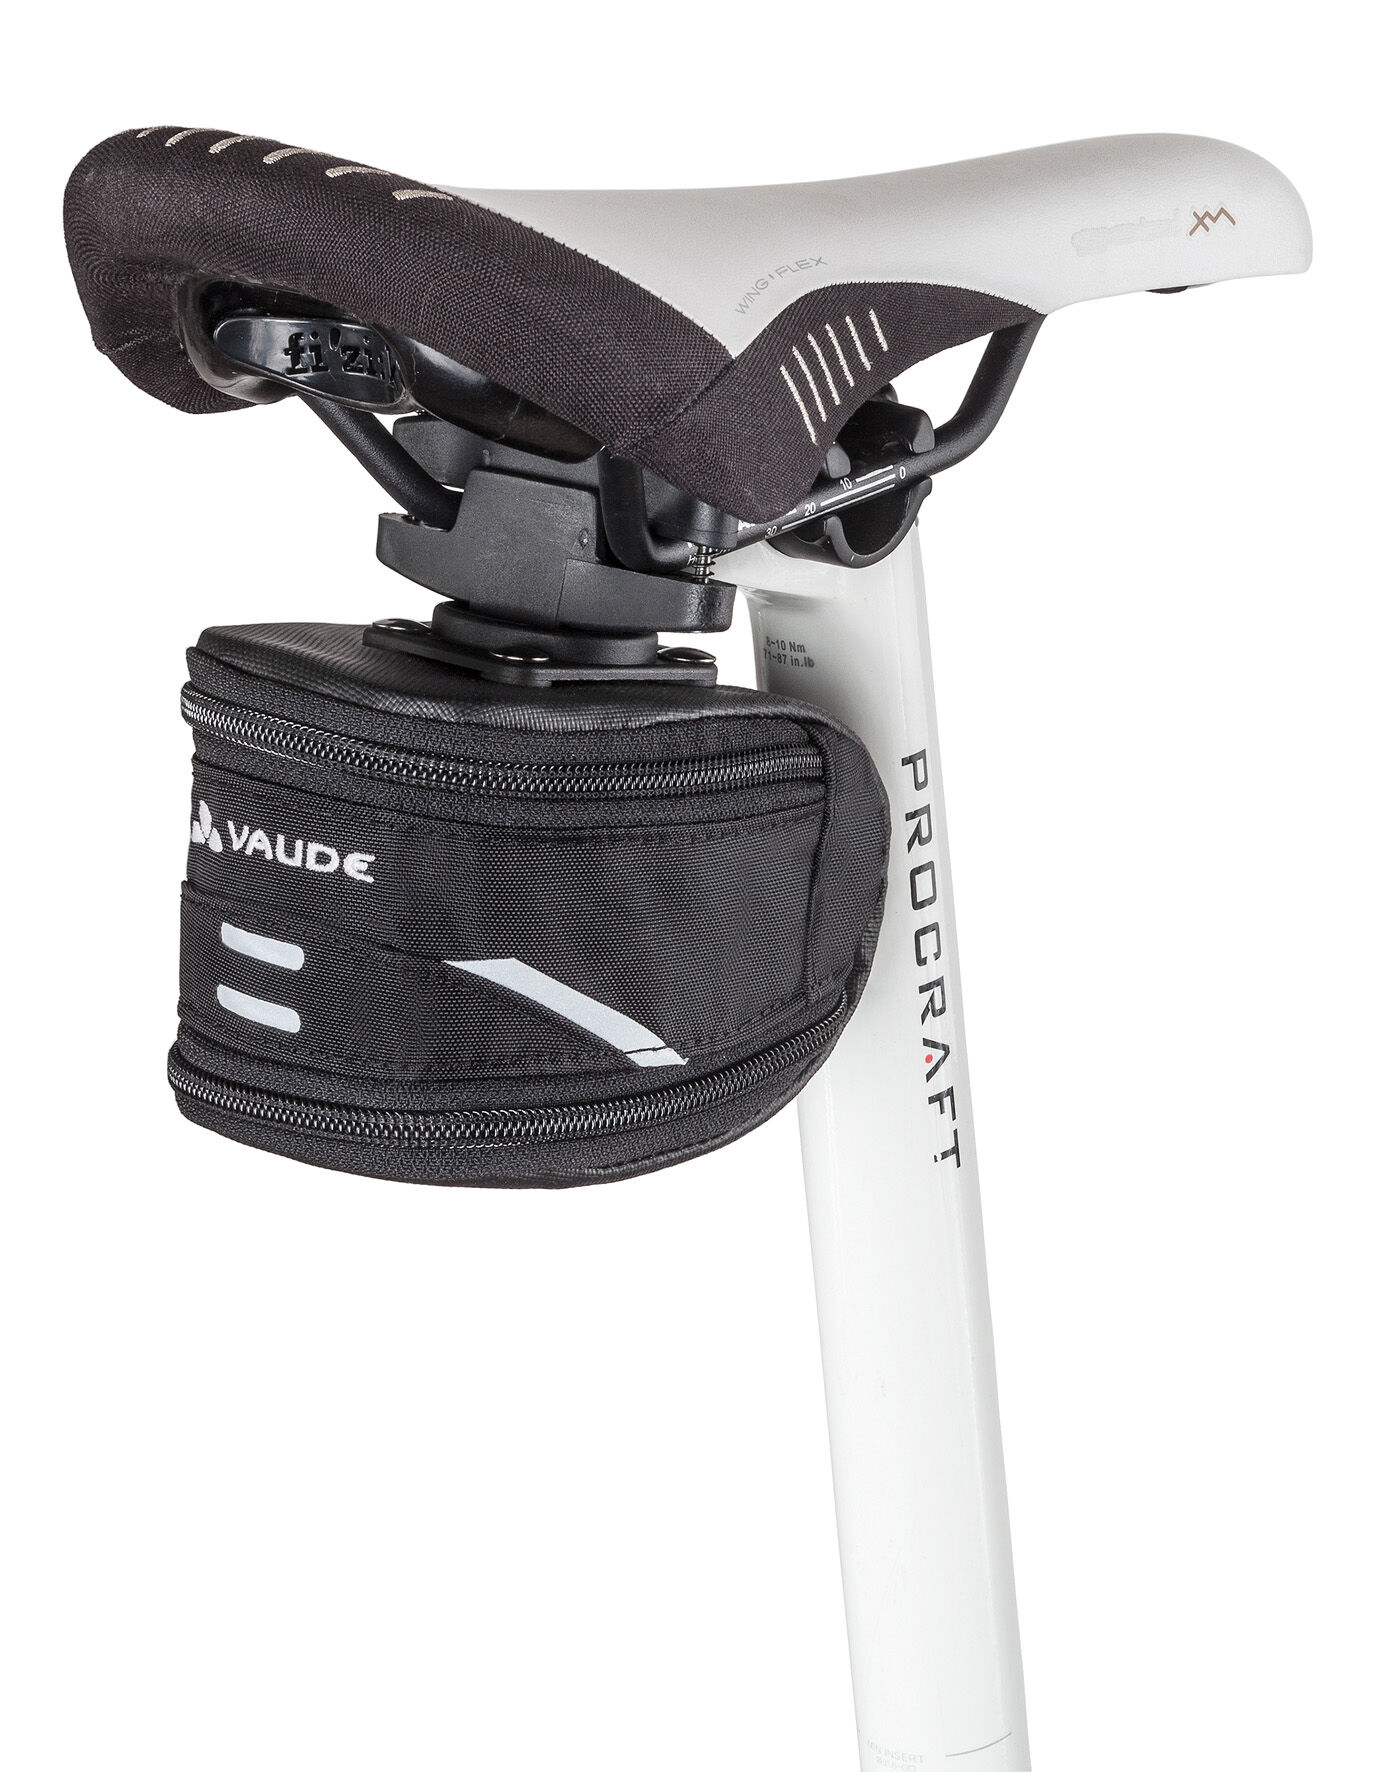 Vaude - Tool S - Bike bag